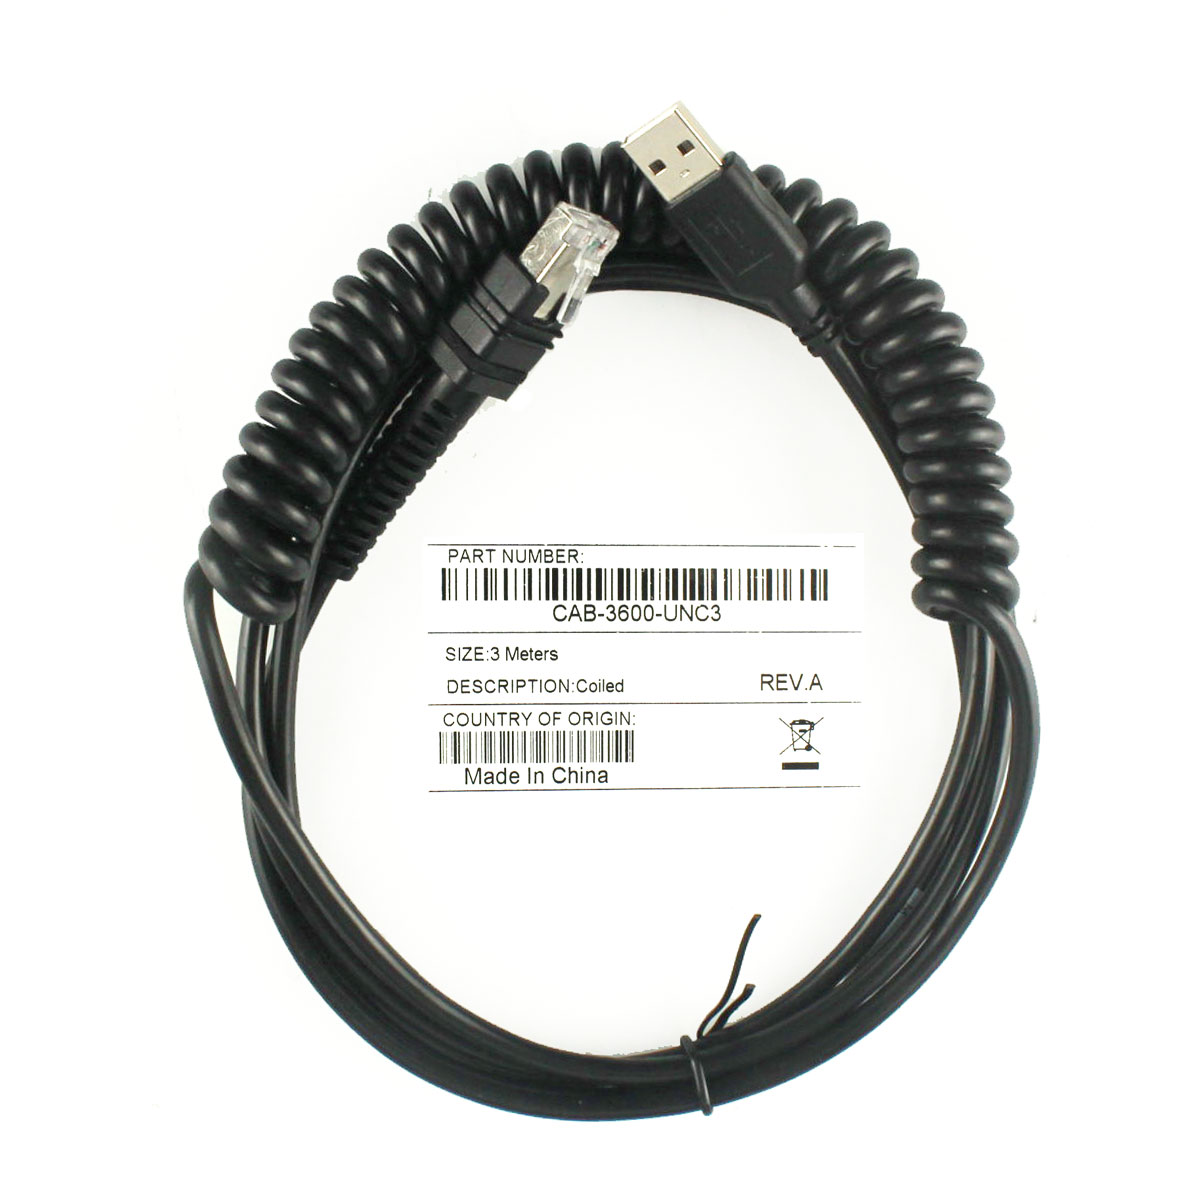 New compatible USB 3 meter Spring cable for Zebra LI3608 LI3678 - Click Image to Close